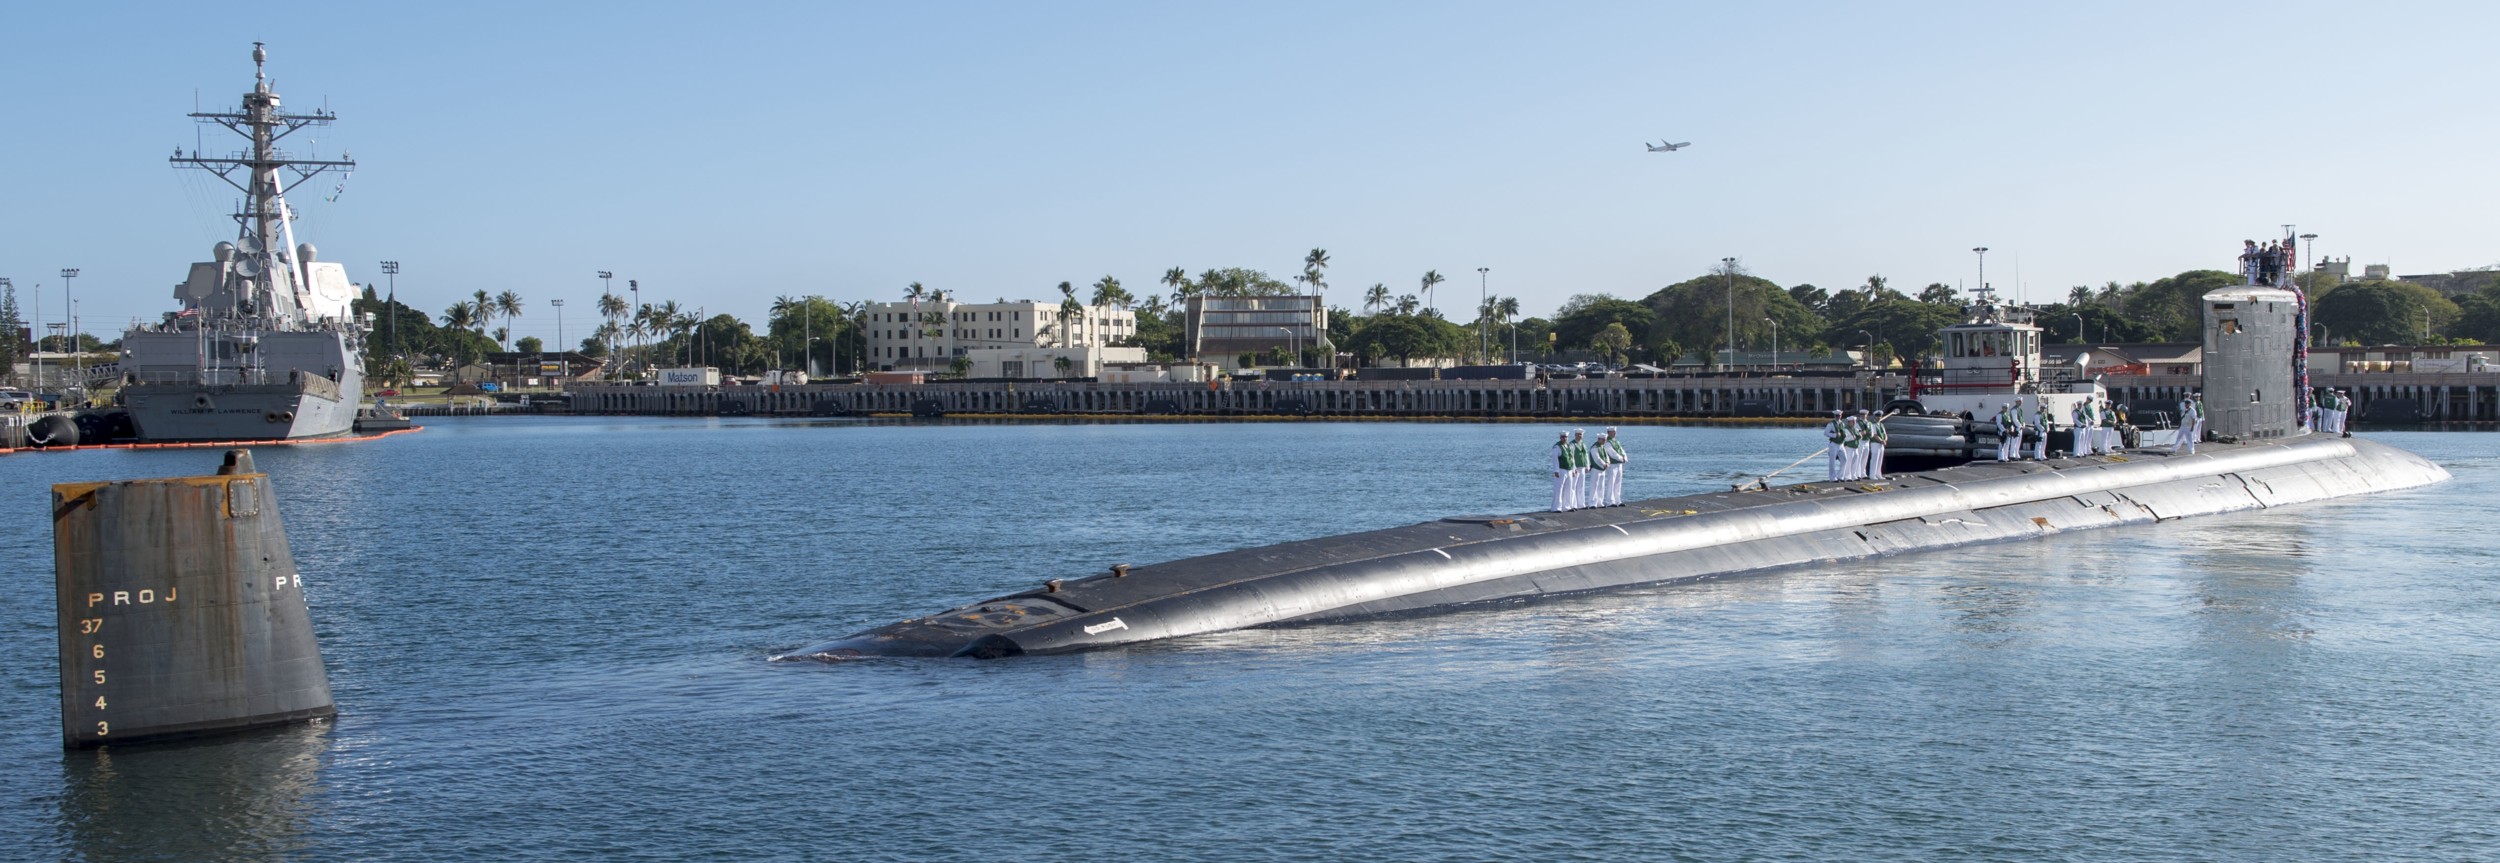 ssn-780 uss missouri virginia class attack submarine us navy 46 new homeport pearl harbor hickam